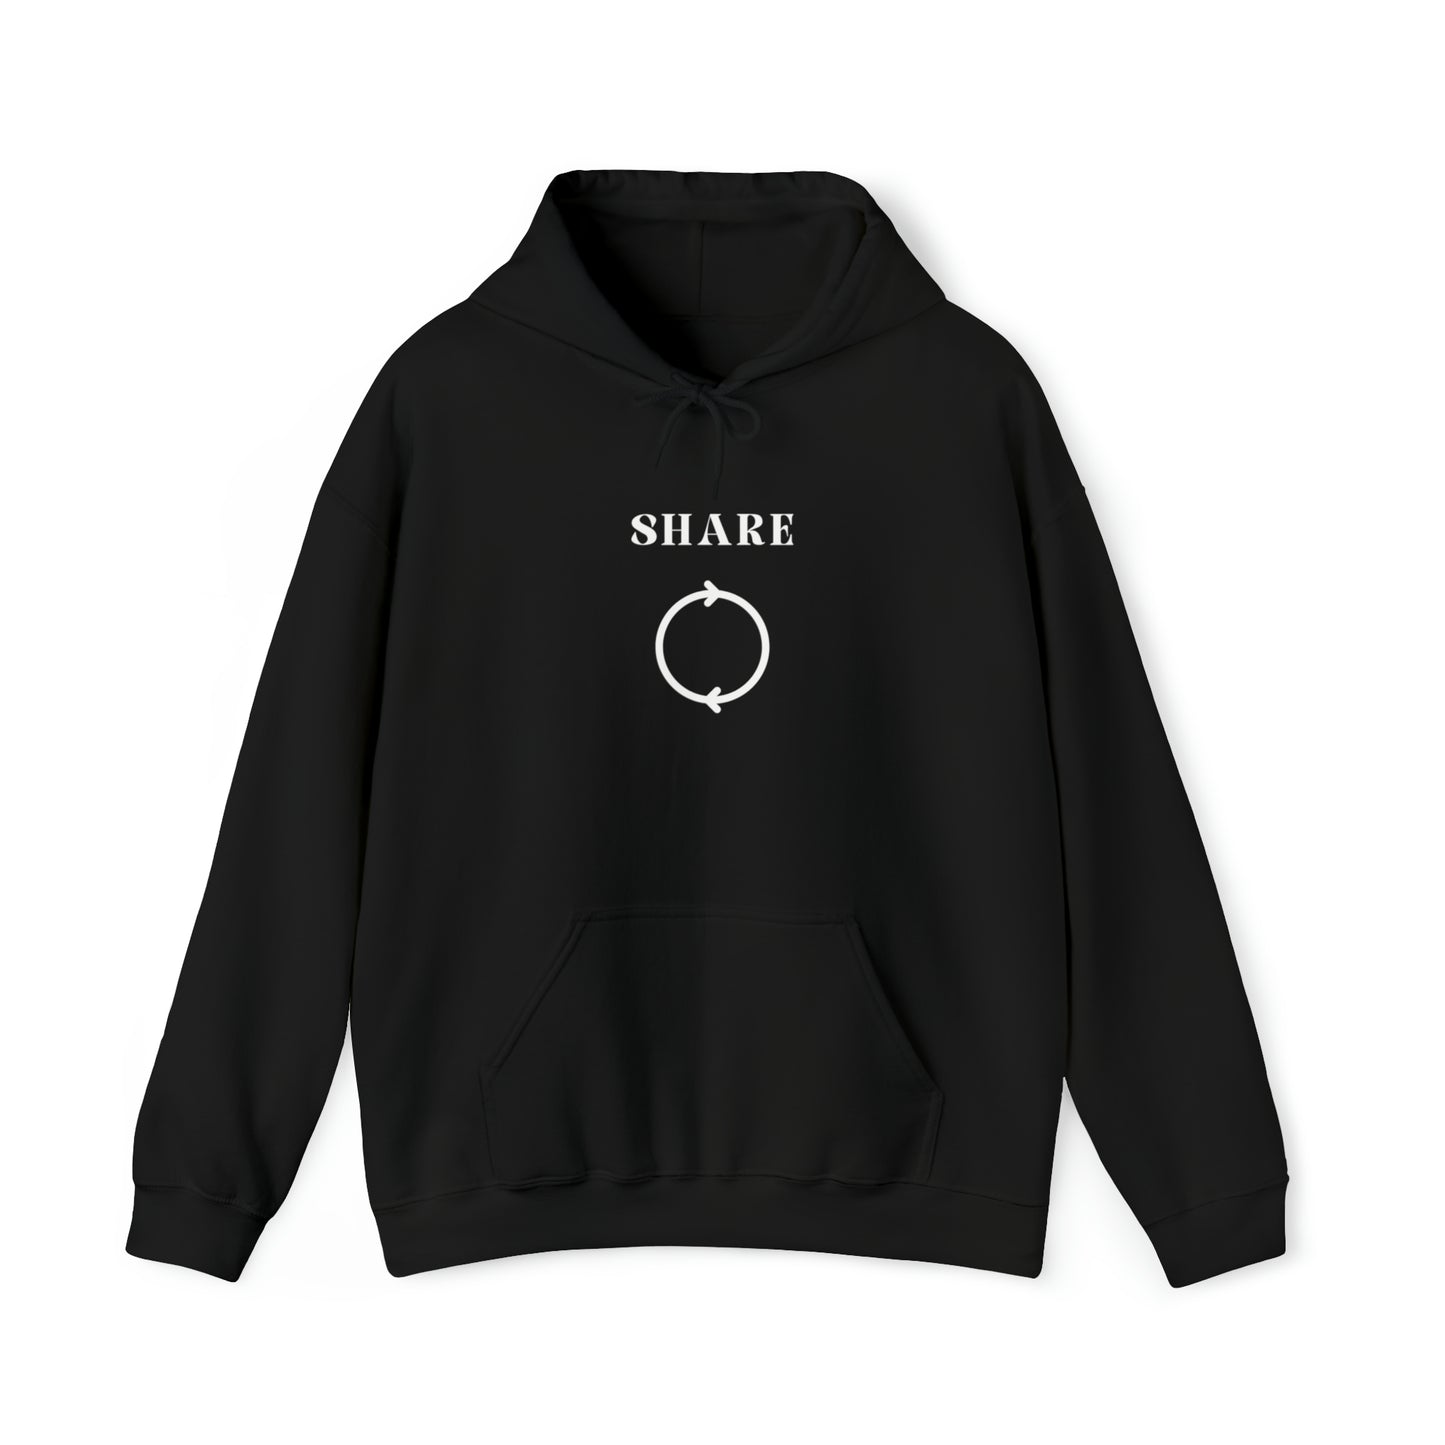 Share  Hooded Sweatshirt gift, inspirational words hoodie gift, sweatshirt gift that encourages hoodie friends gift